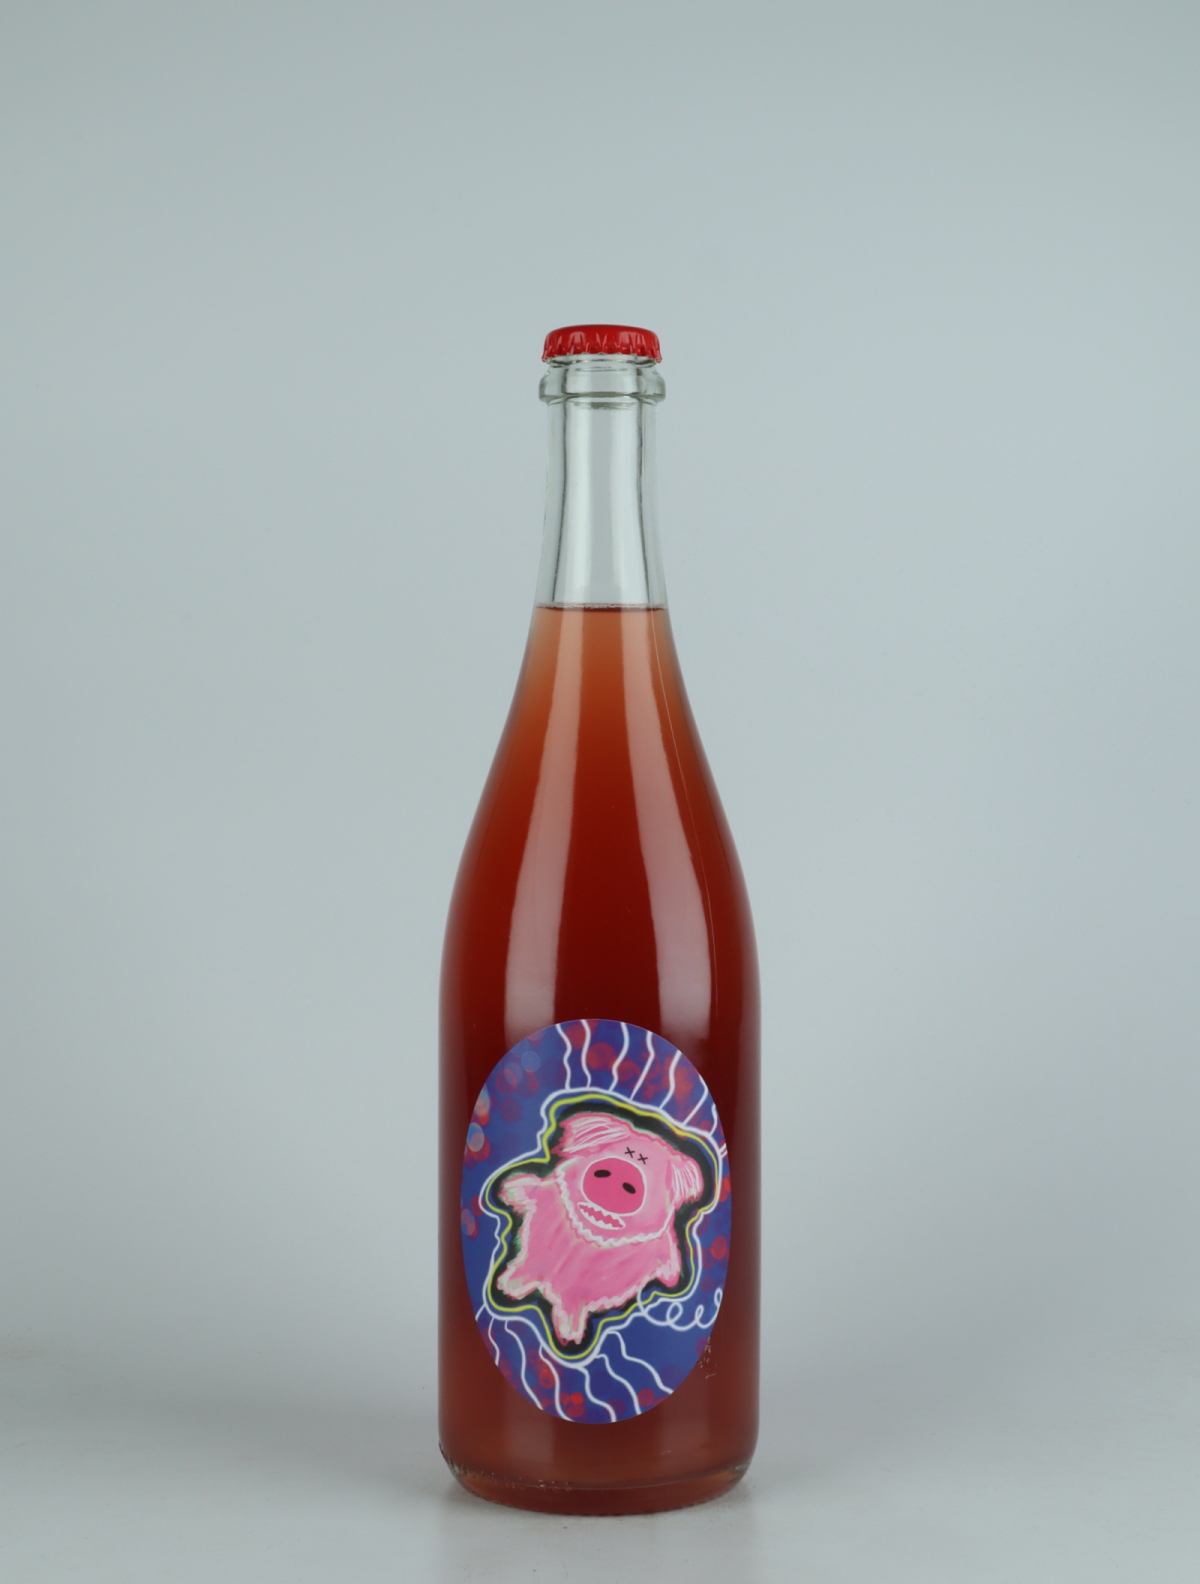 A bottle 2021 Piggy Pop Sparkling from Wildman, Adelaide Hills in 